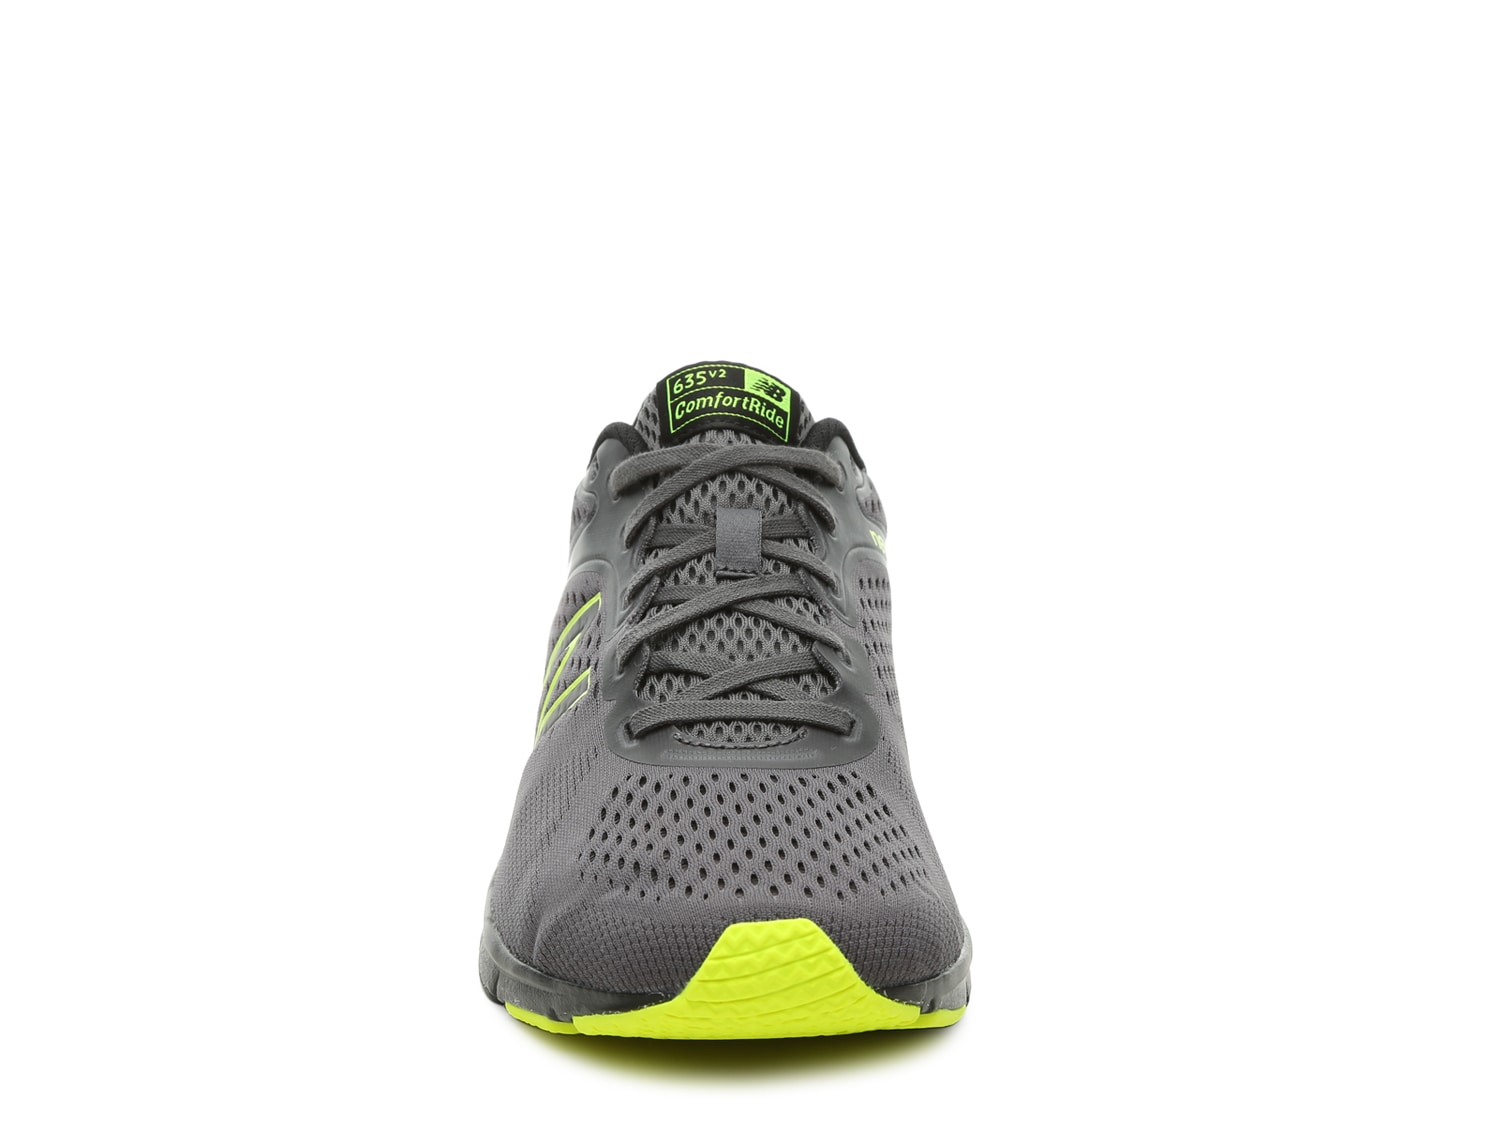 635 v2 lightweight running shoe